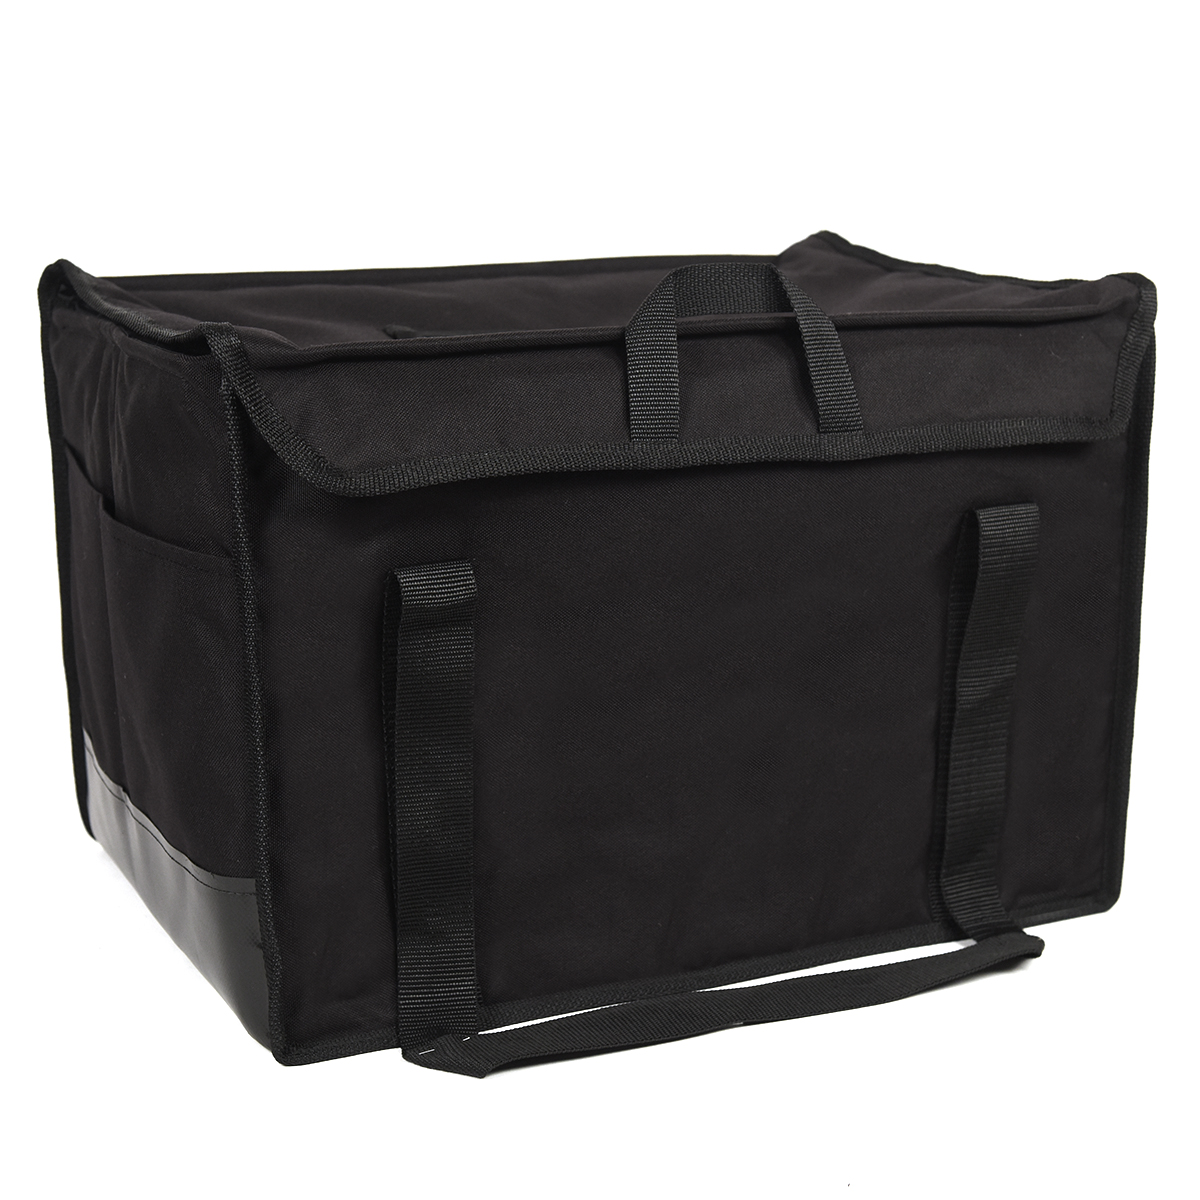 Handbag Purse Organizer Insert  Patented, Sturdy and Flexible